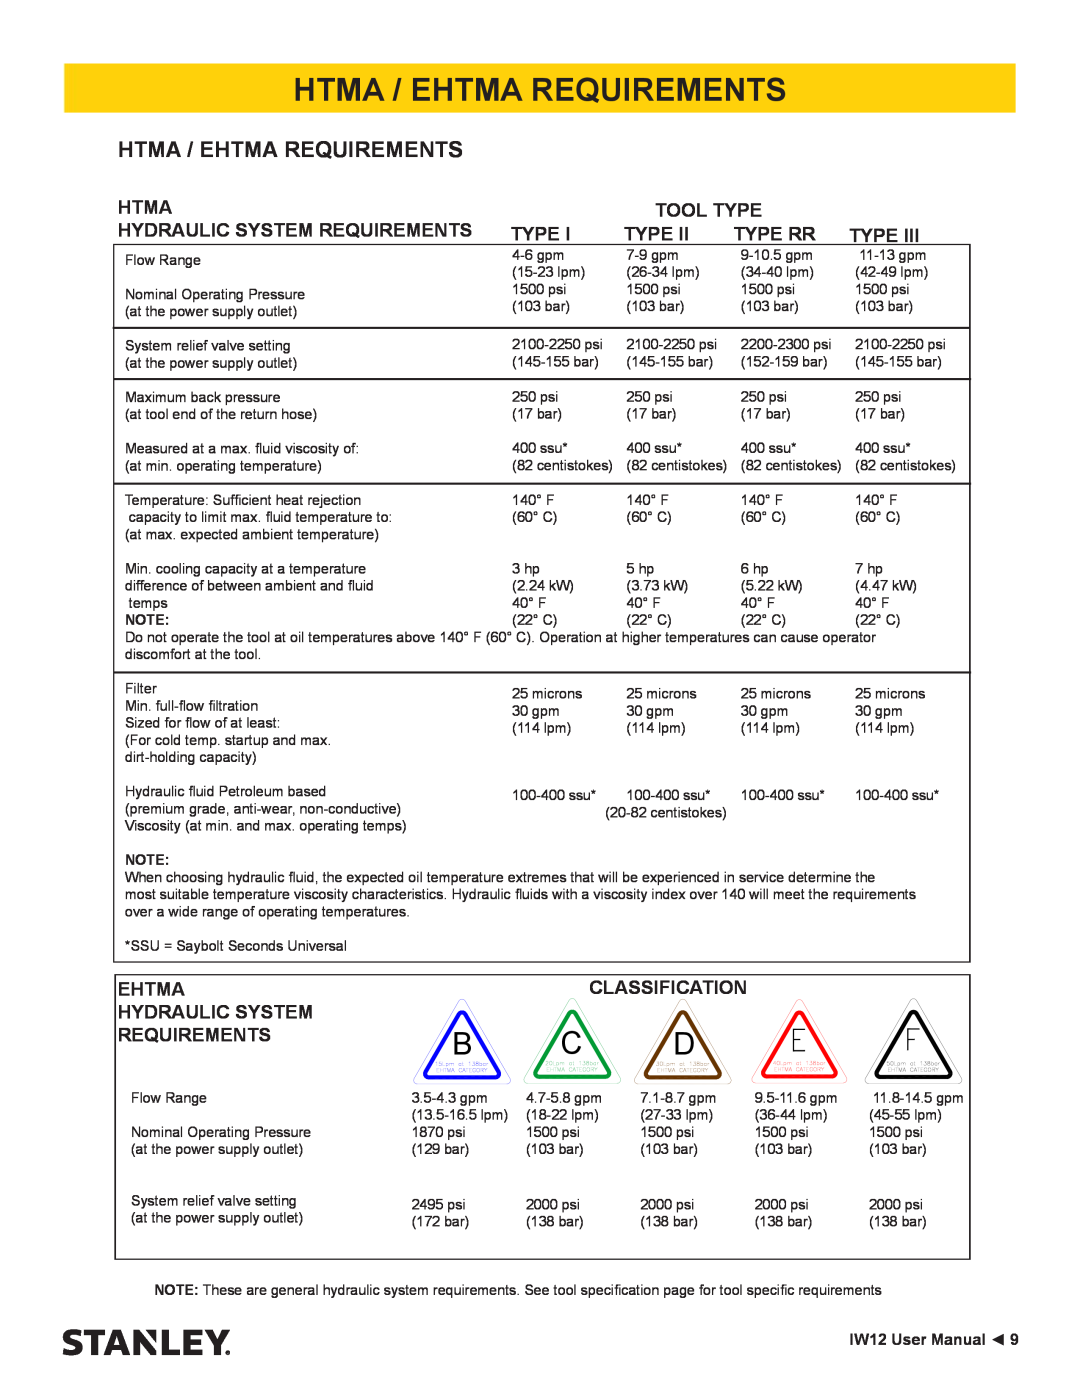 Stanley Black & Decker IW12 user manual Htma / Ehtma Requirements 